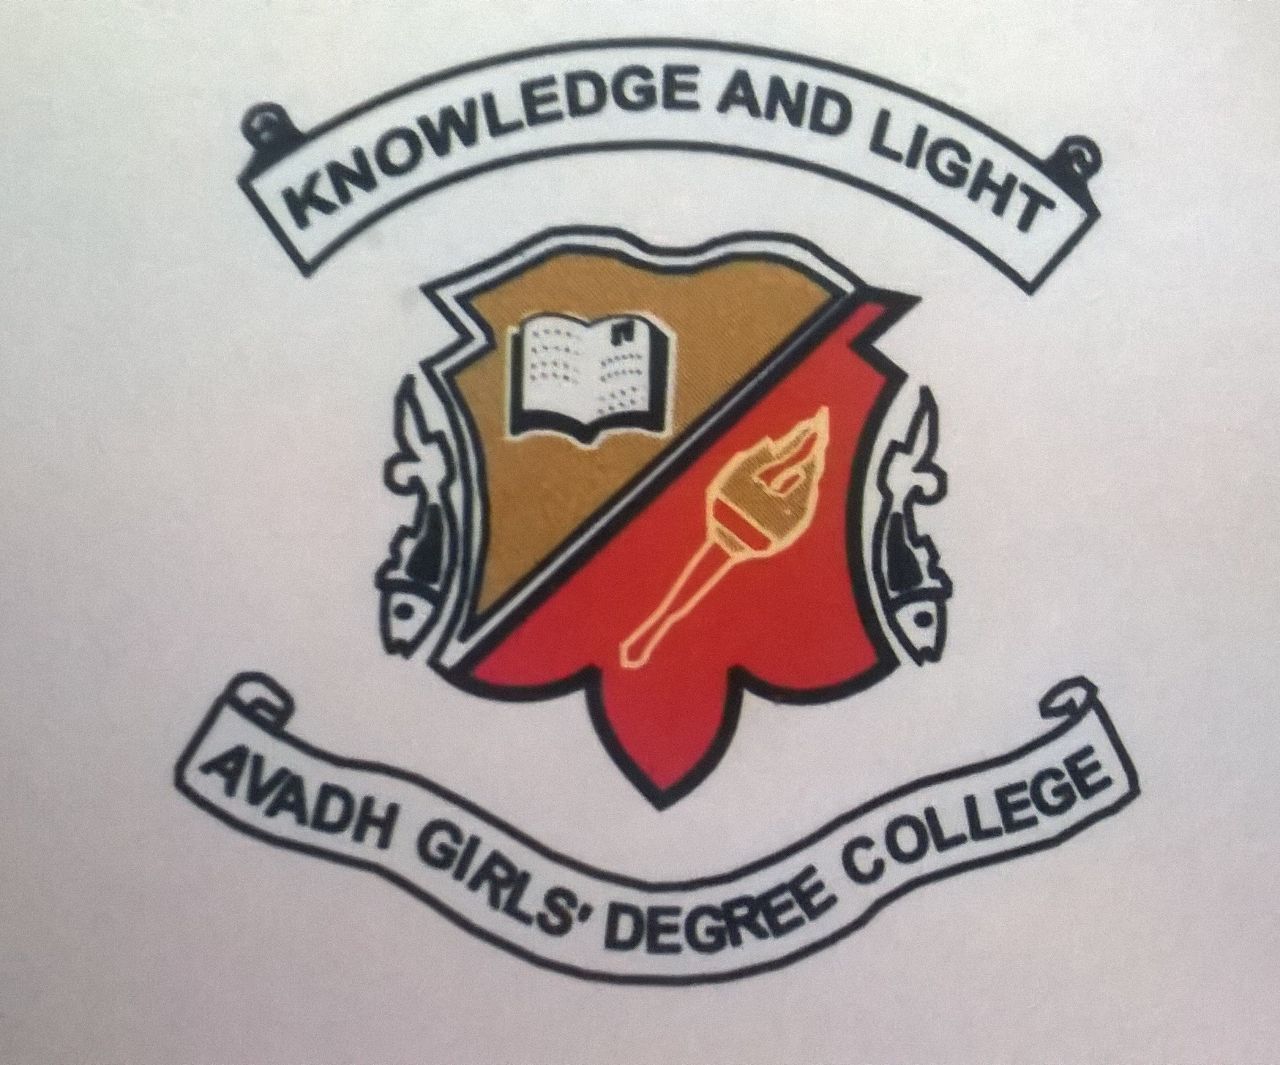 Avadh Girls' Degree College